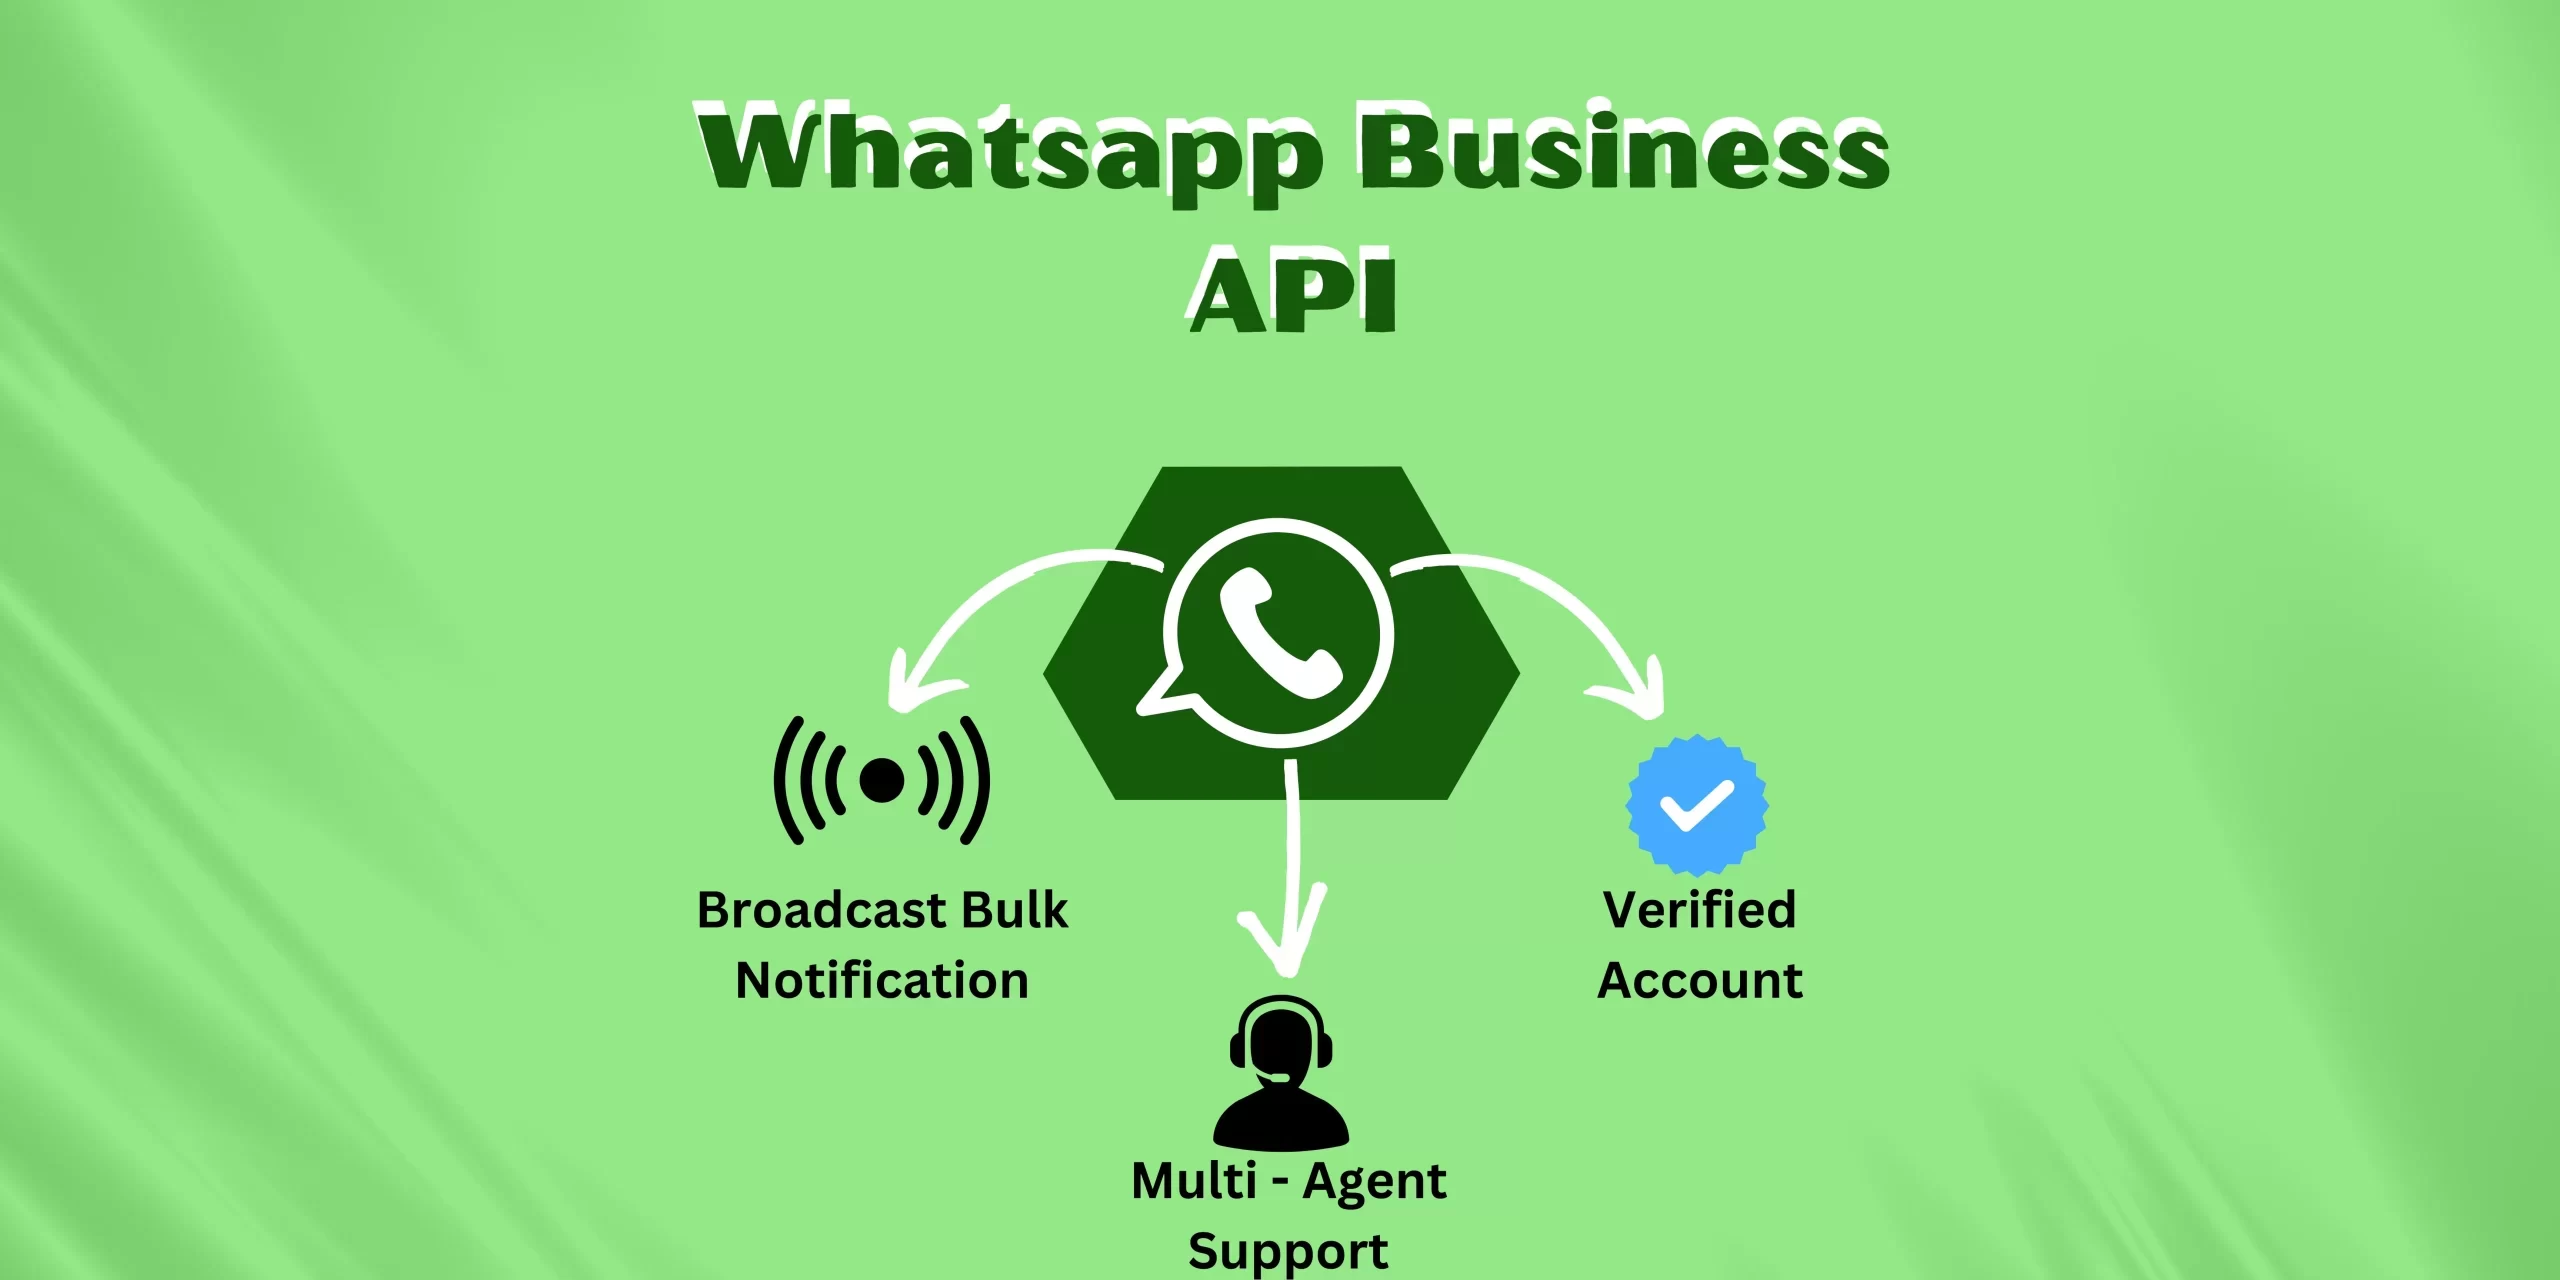 Whatsapp business API